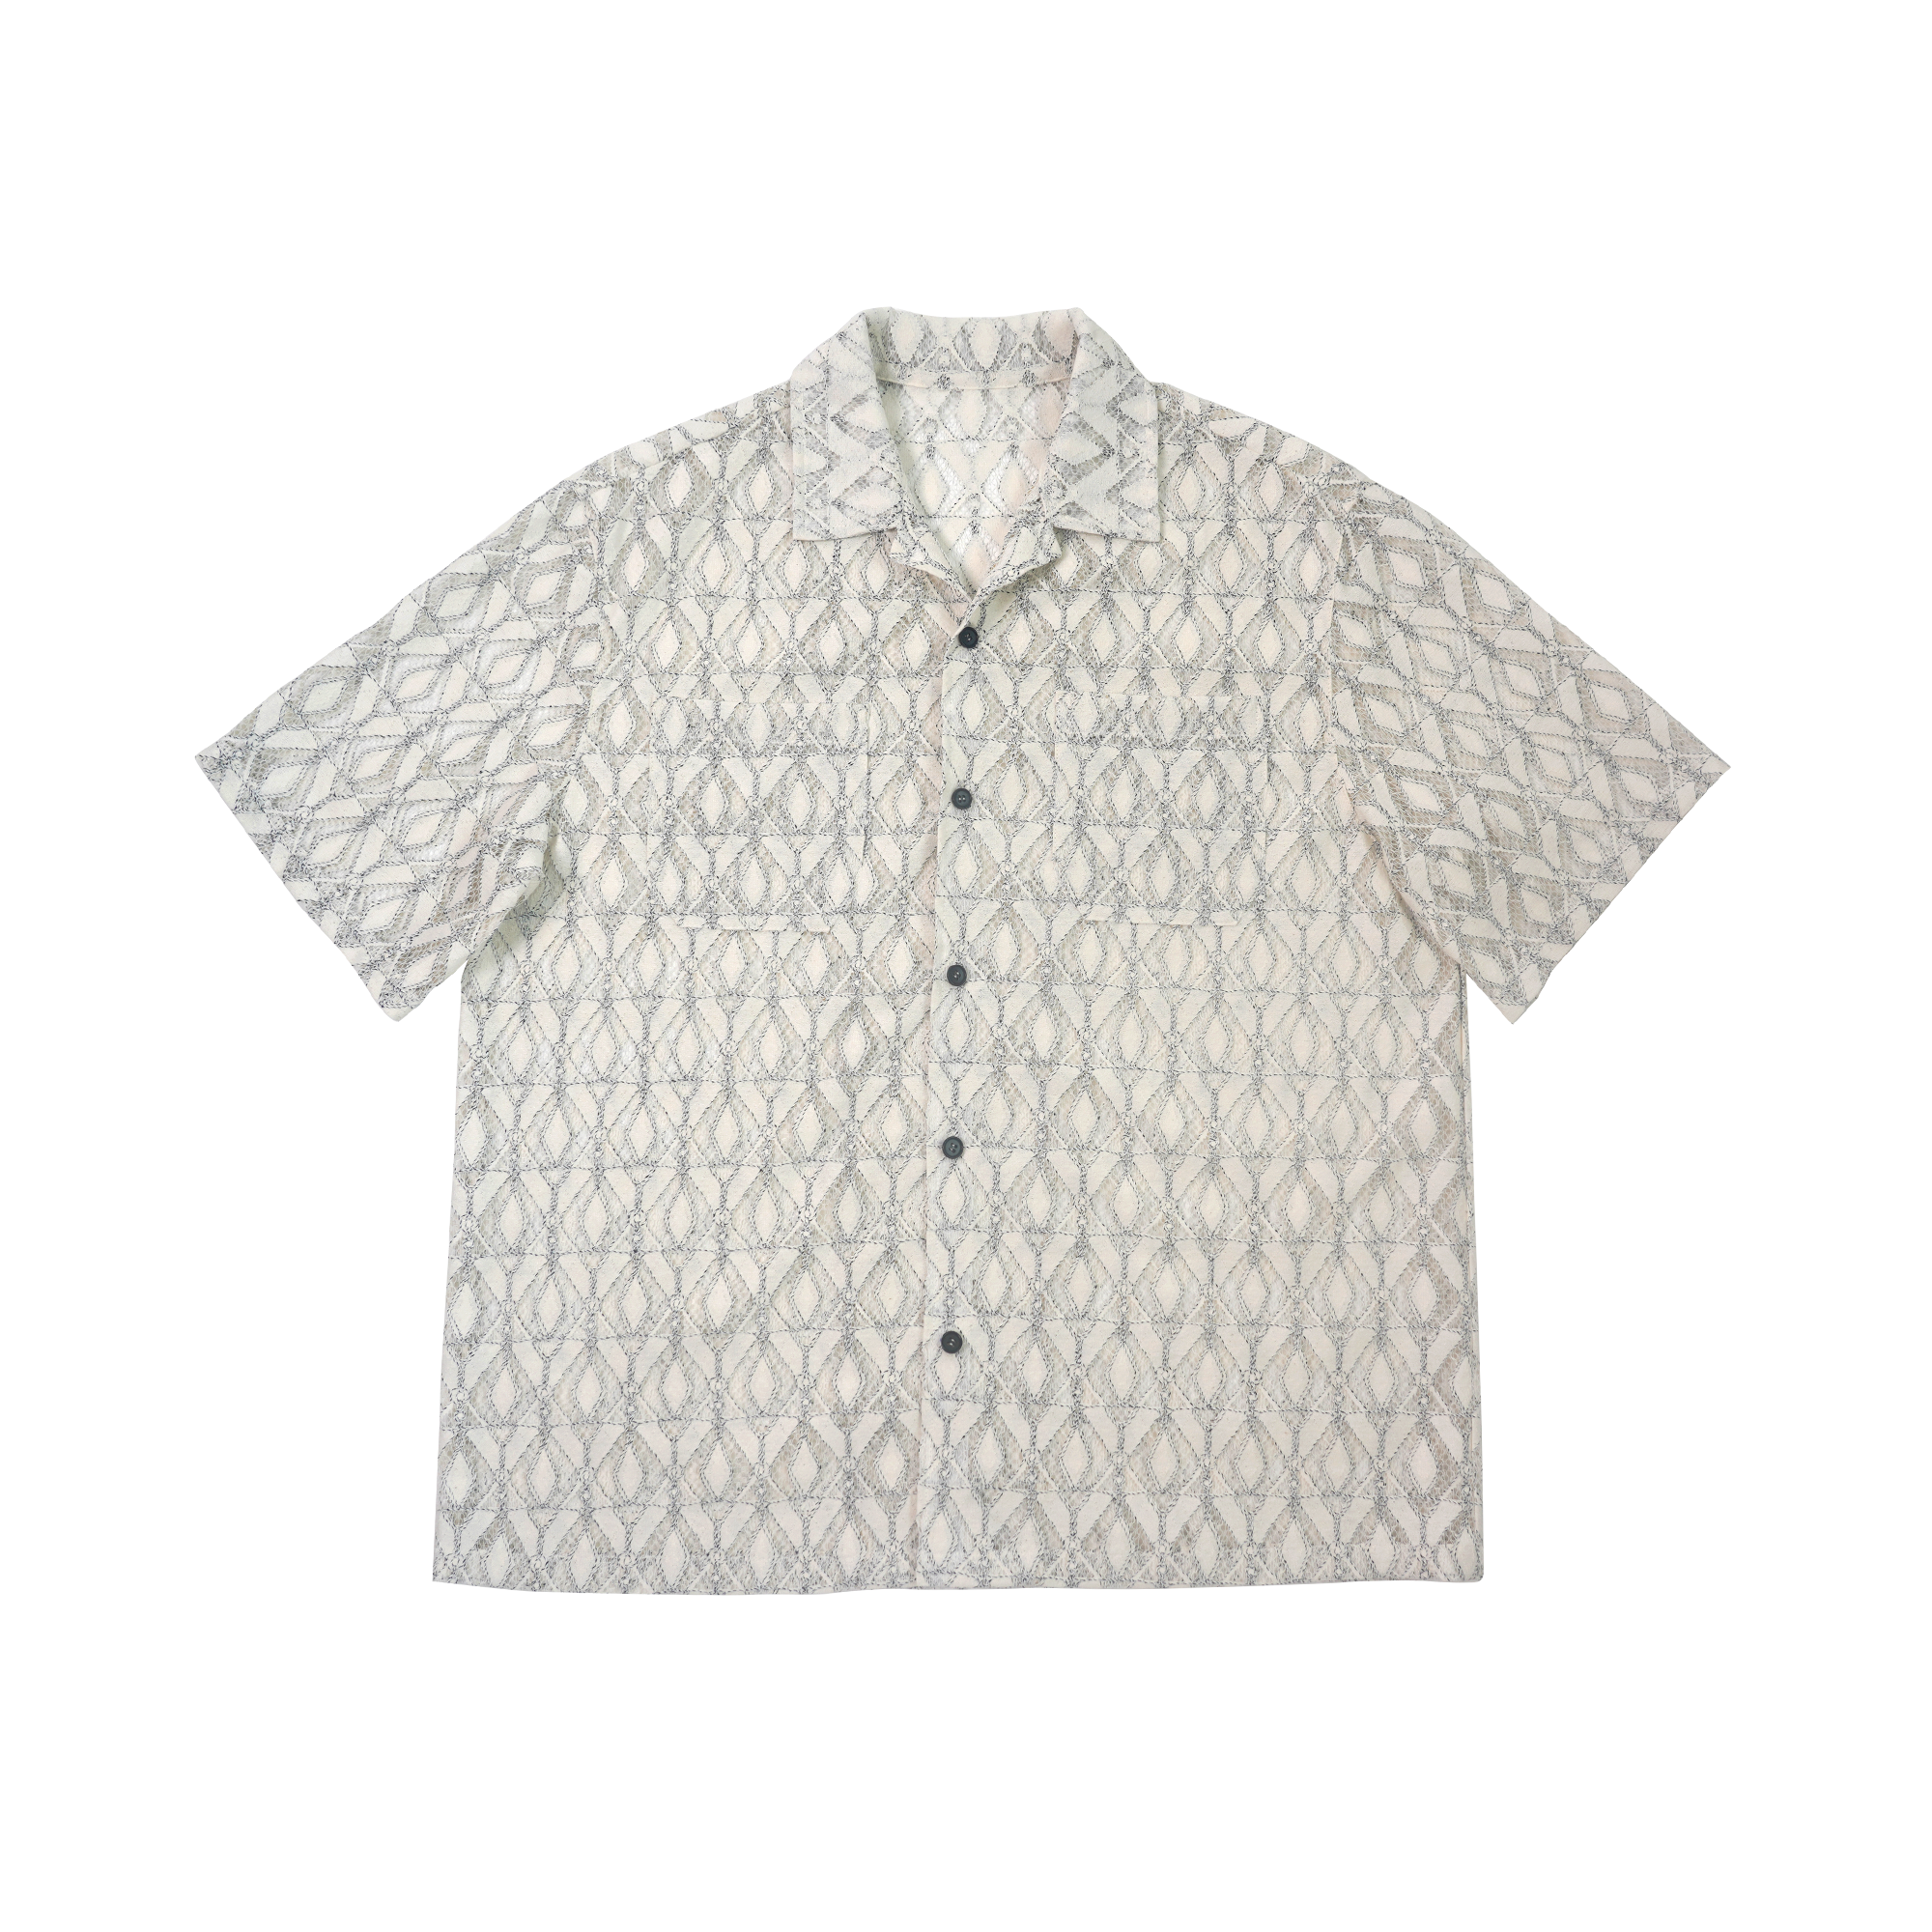 Columbus lace short-sleeved shirt